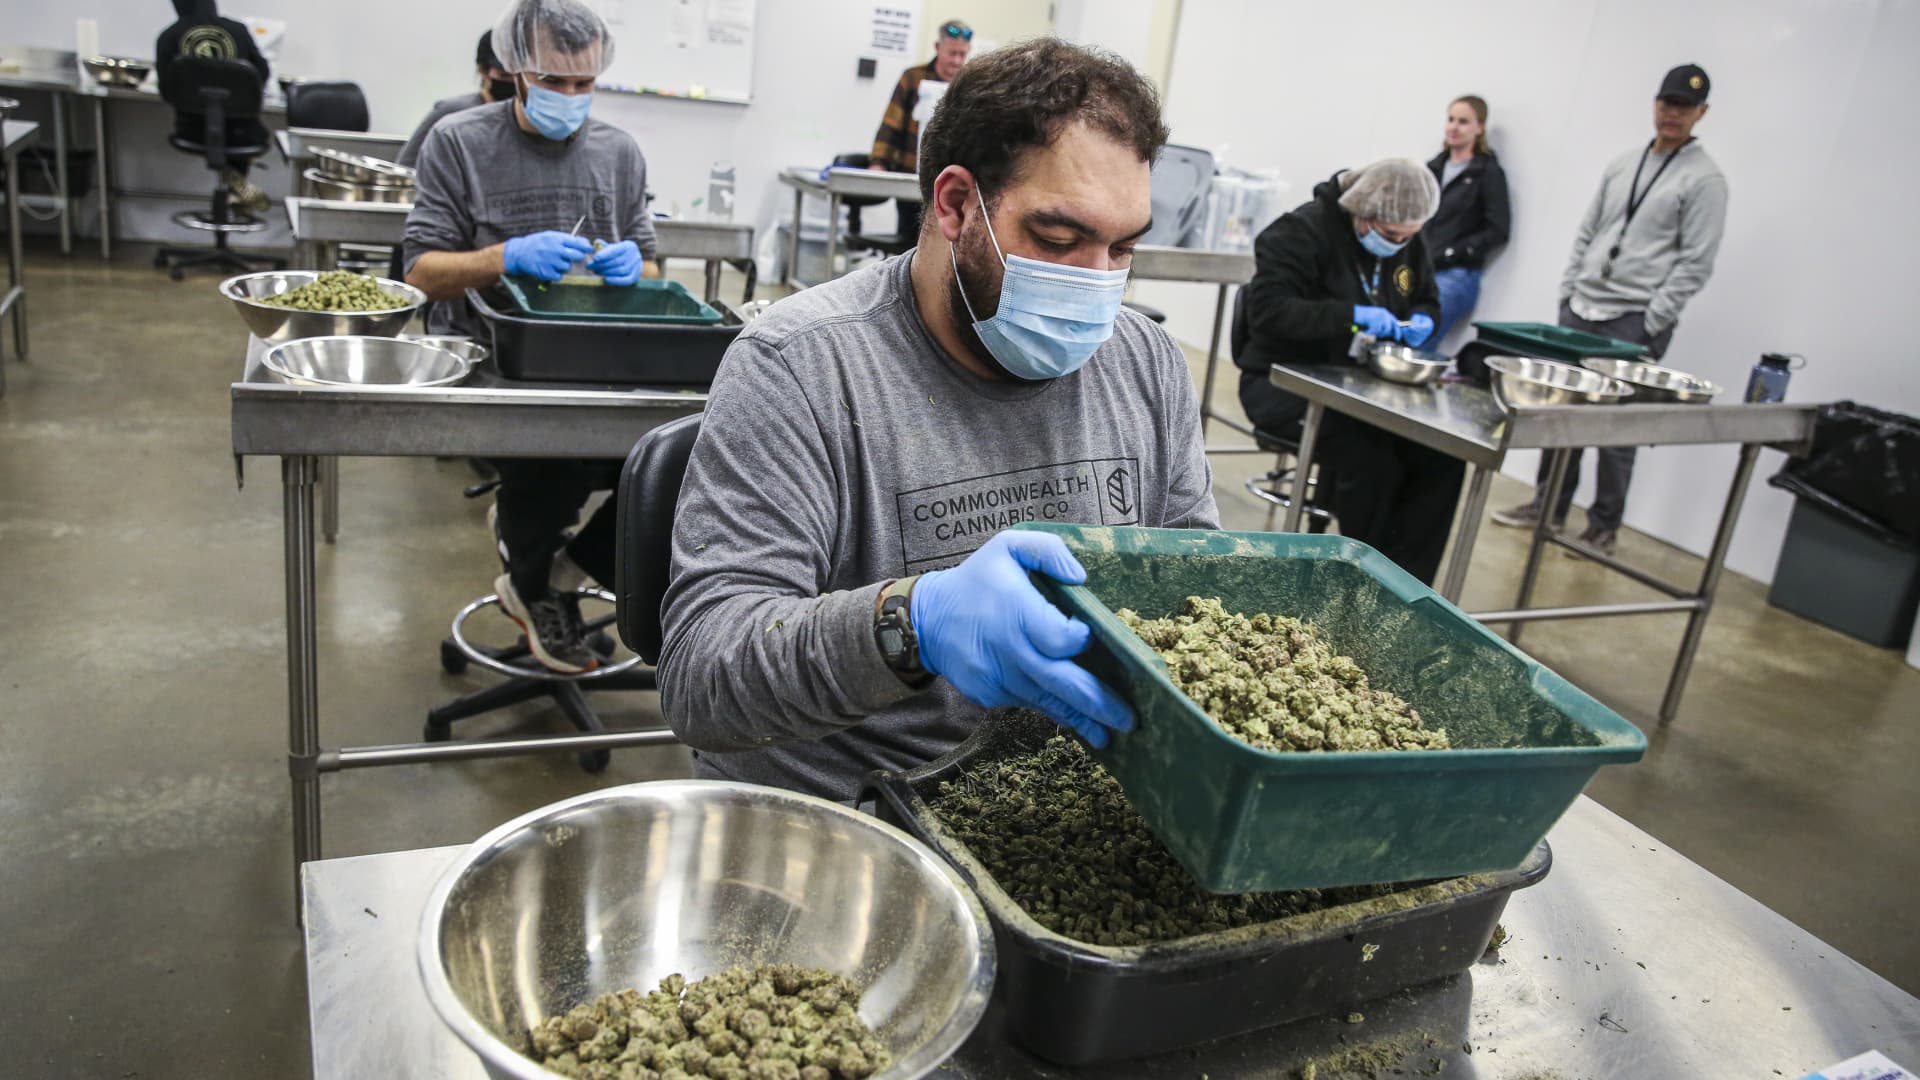 HHS calls for easing restrictions on marijuana, sending cannabis stocks higher